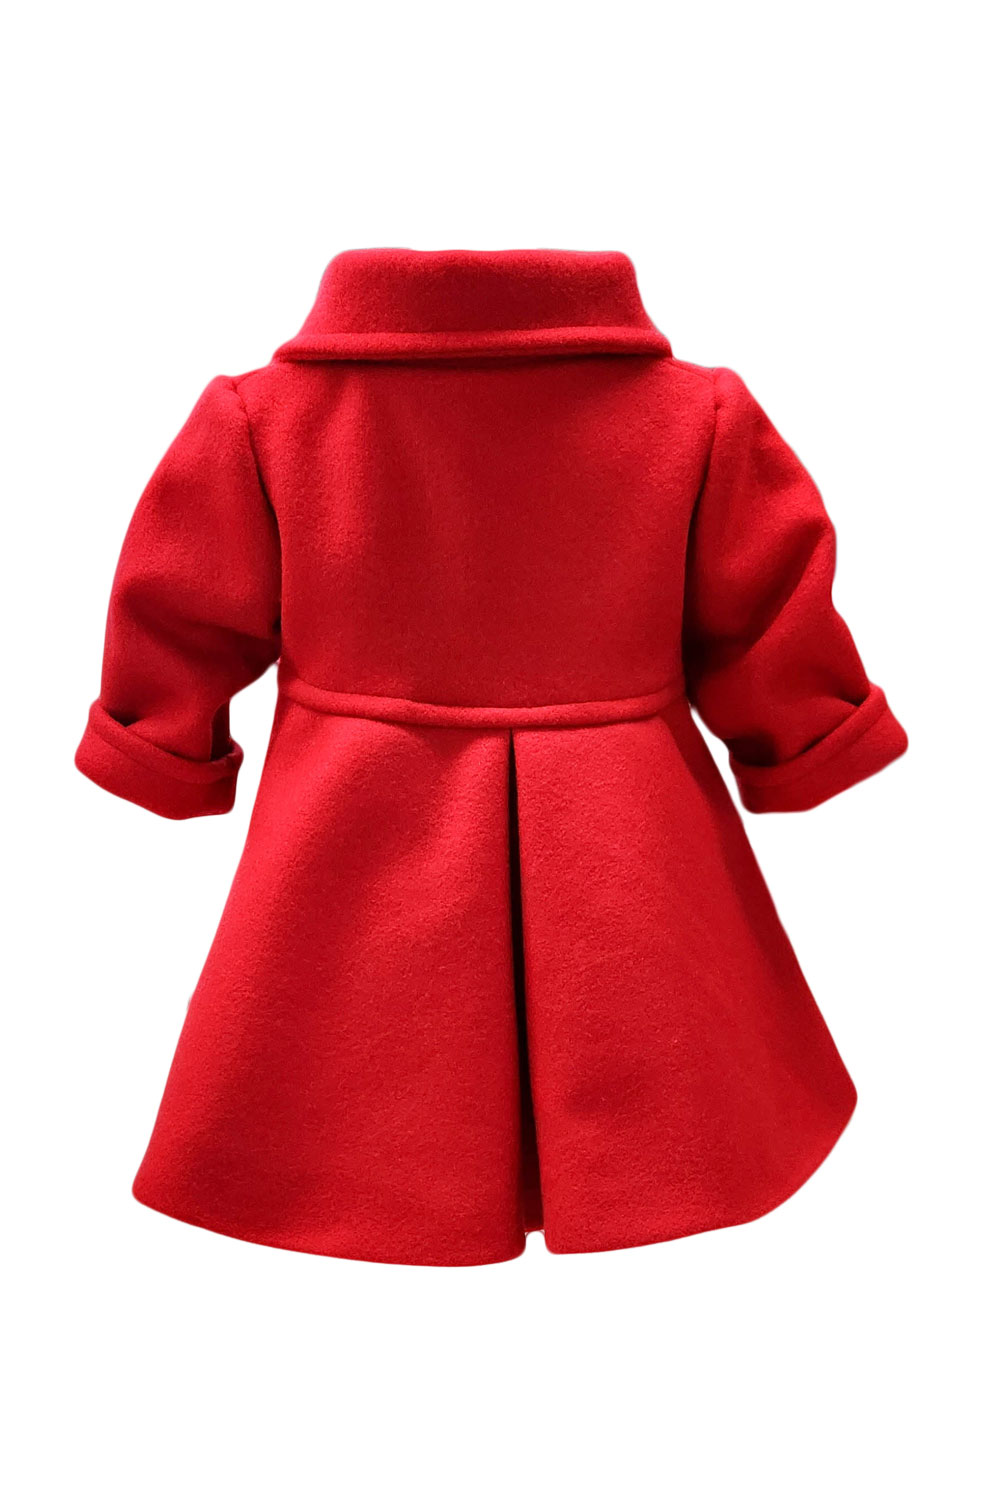 Palton model Basic Trendy culoare rosie, pentru fete